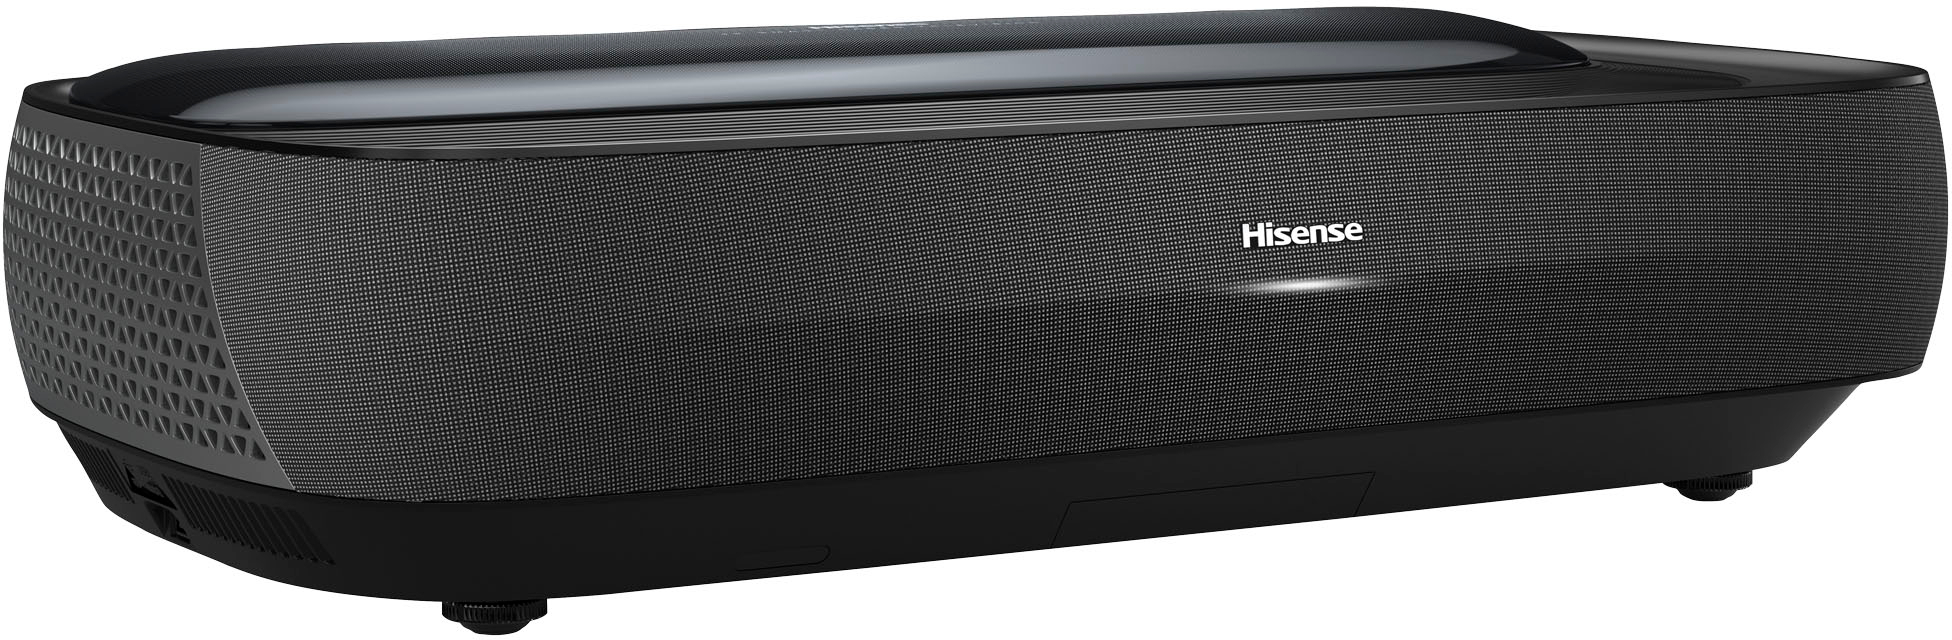 Hisense 120L9G-CINE120A - TV láser 4K UHD, proyector de triple láser UST de  alcance ultra corto con pantalla ALR de 120 pulgadas, 3000 lúmenes